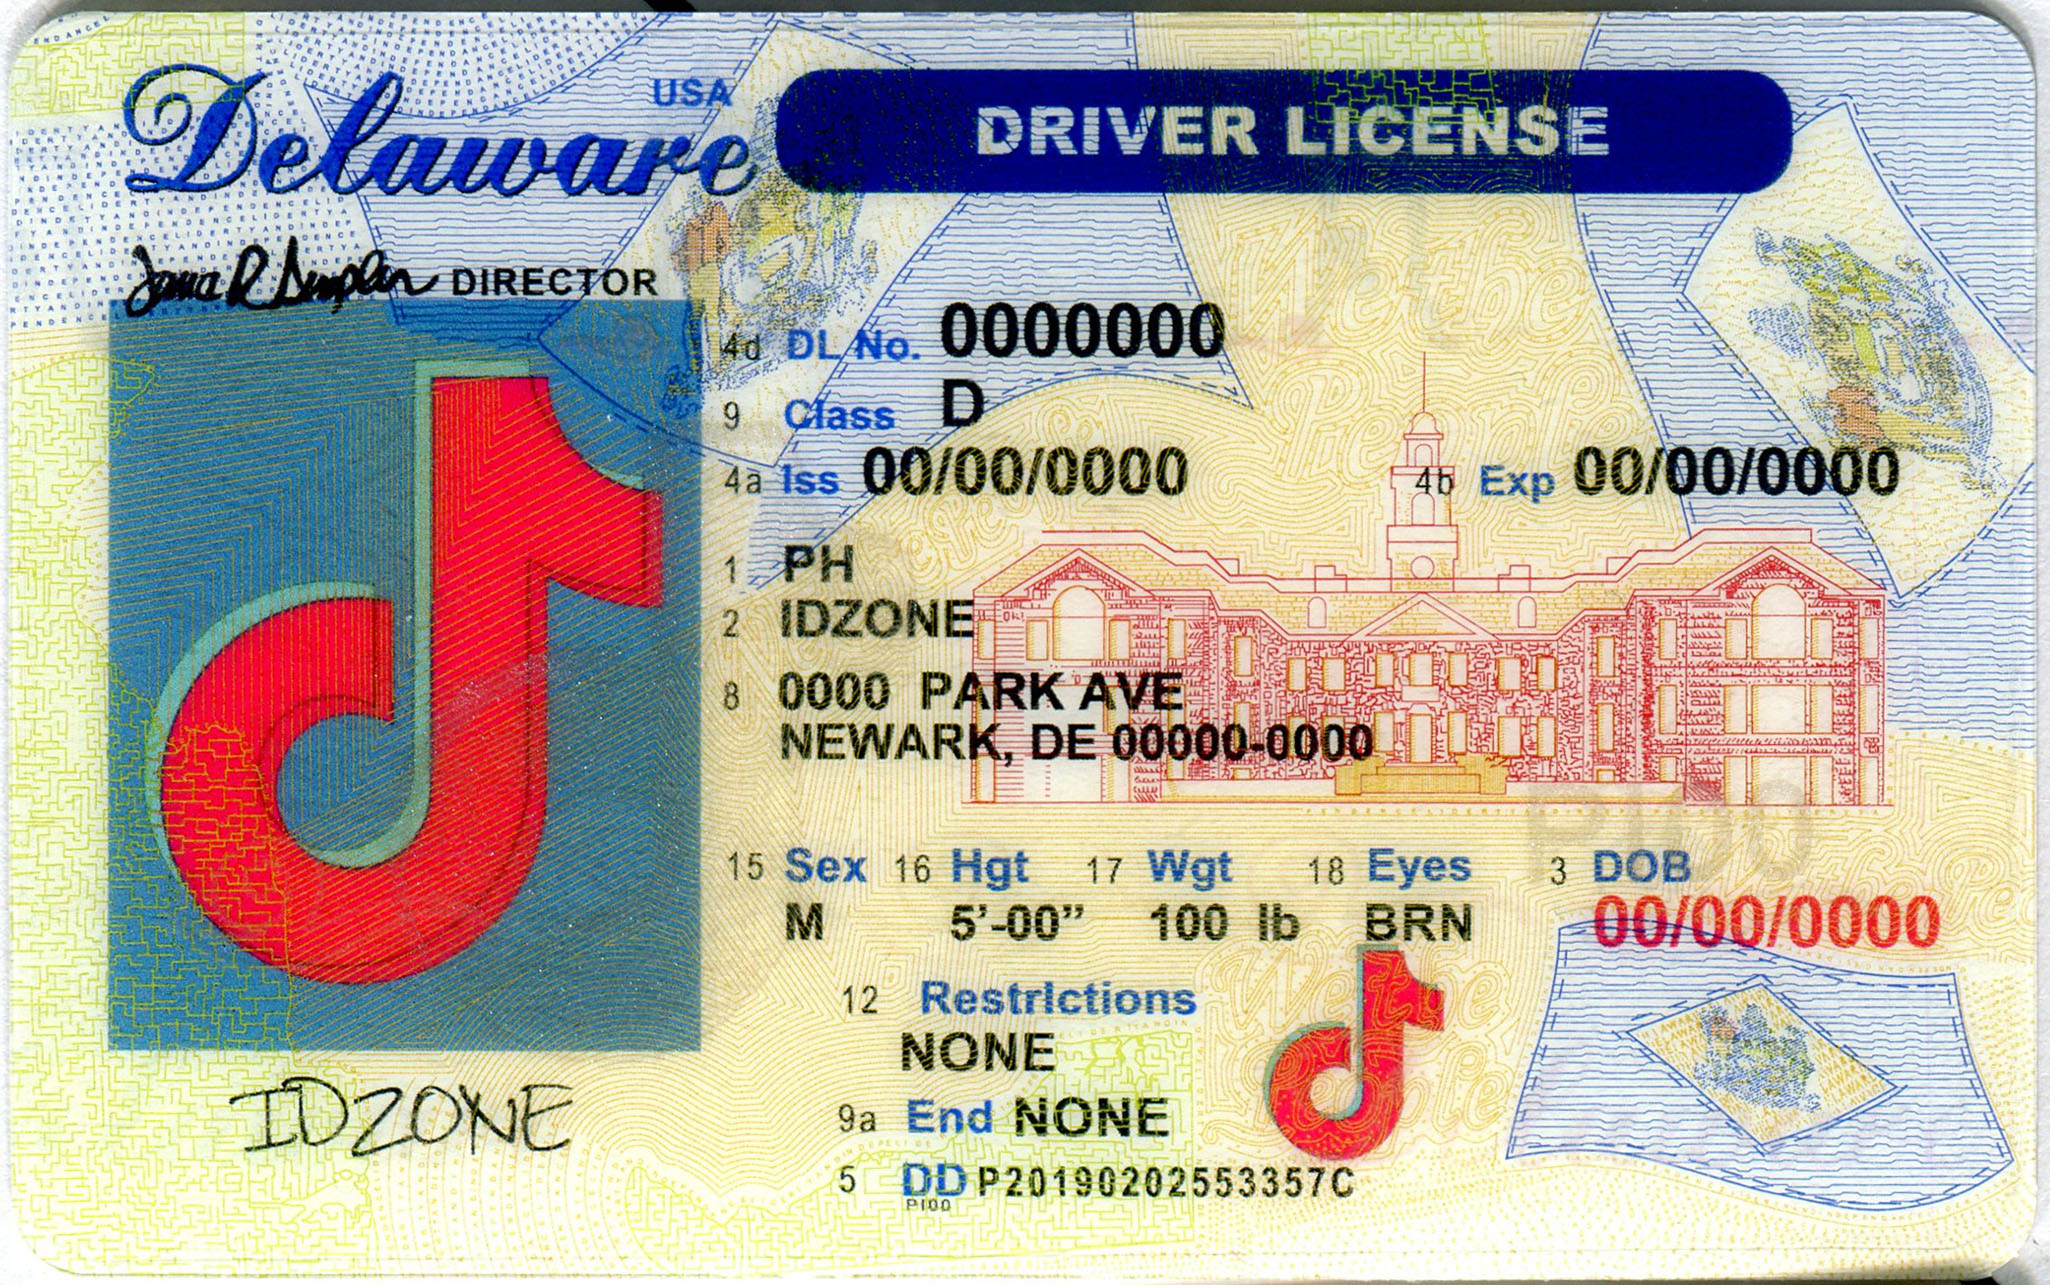 DELAWARE-New fake id